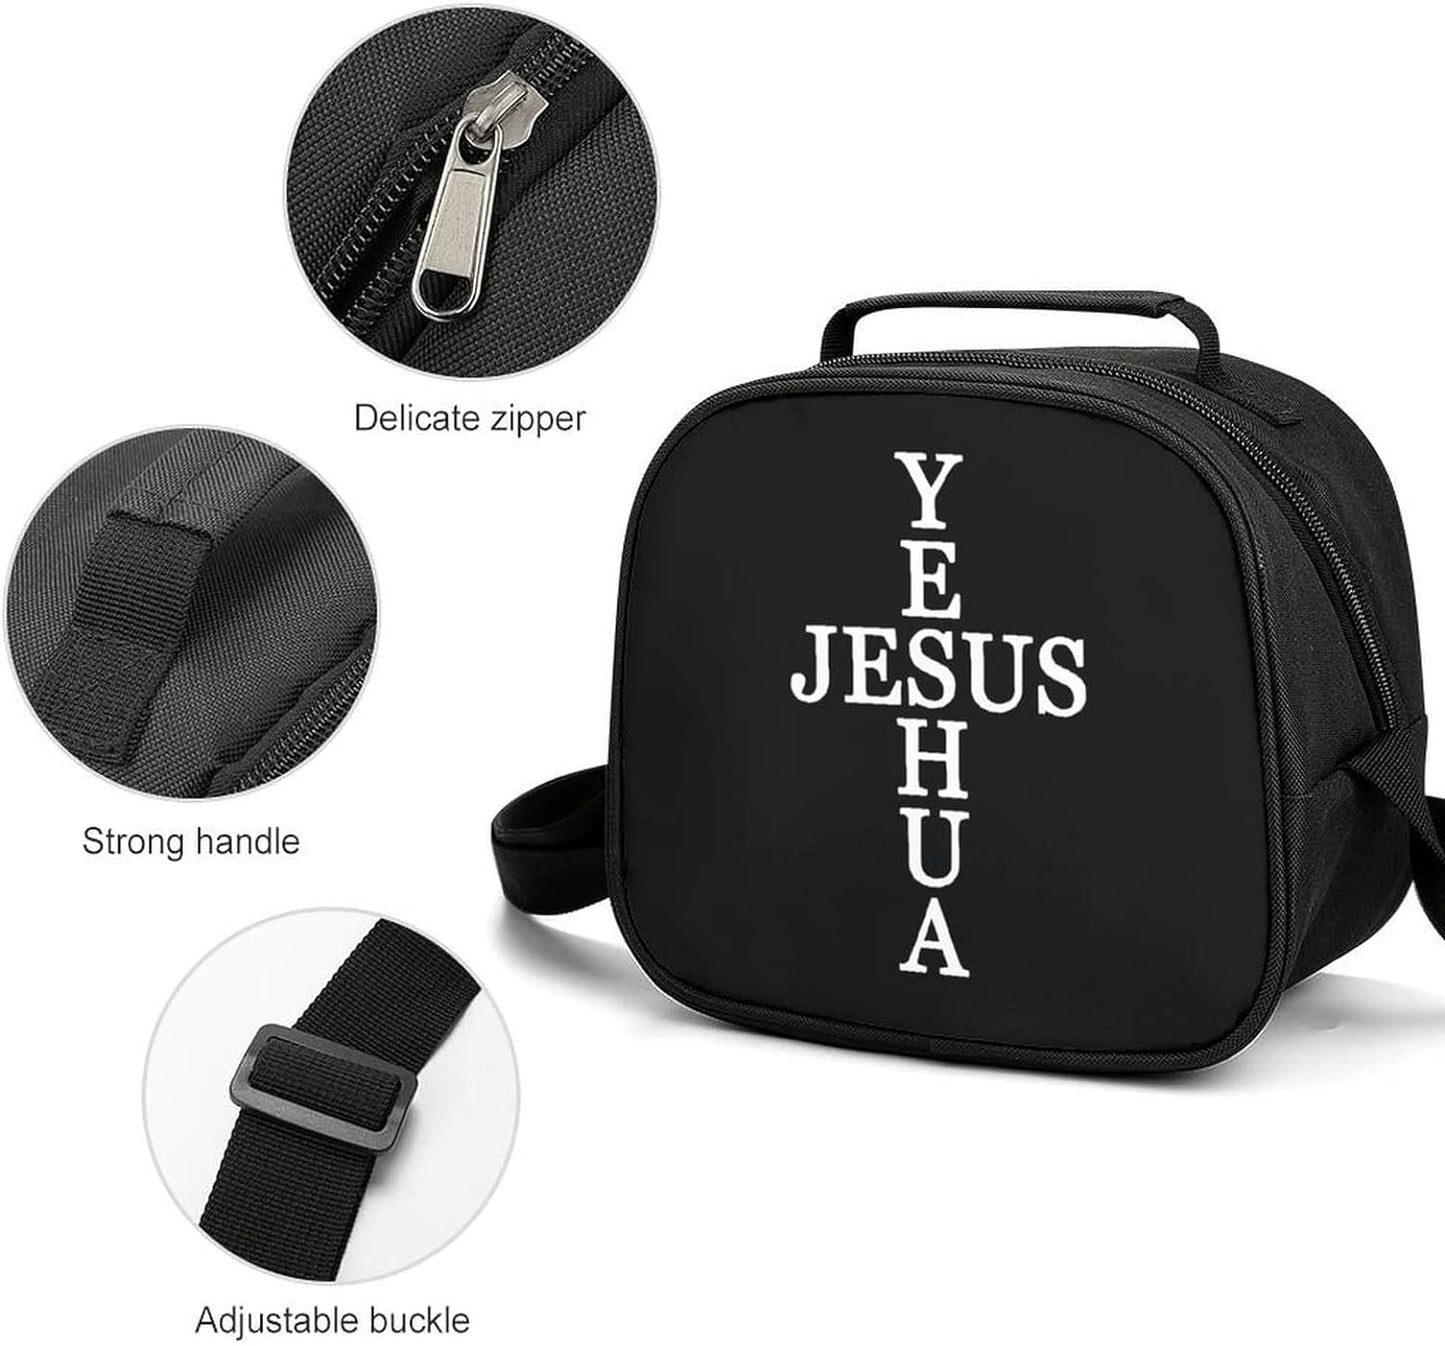 Yeshua Jesus Christian Lunch Bag claimedbygoddesigns